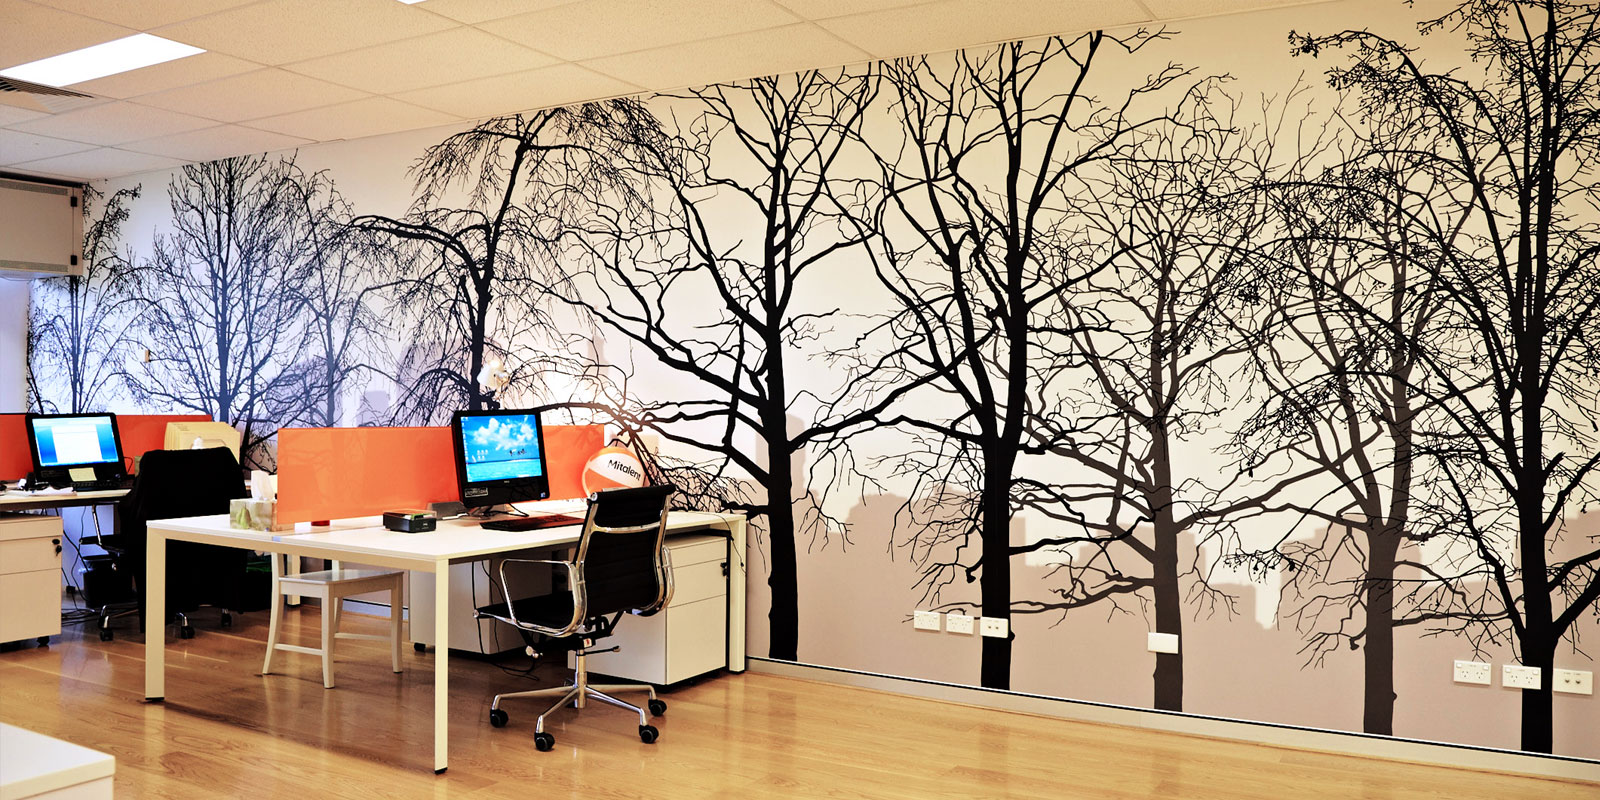 wallpaper design,desk,furniture,office,wall,room